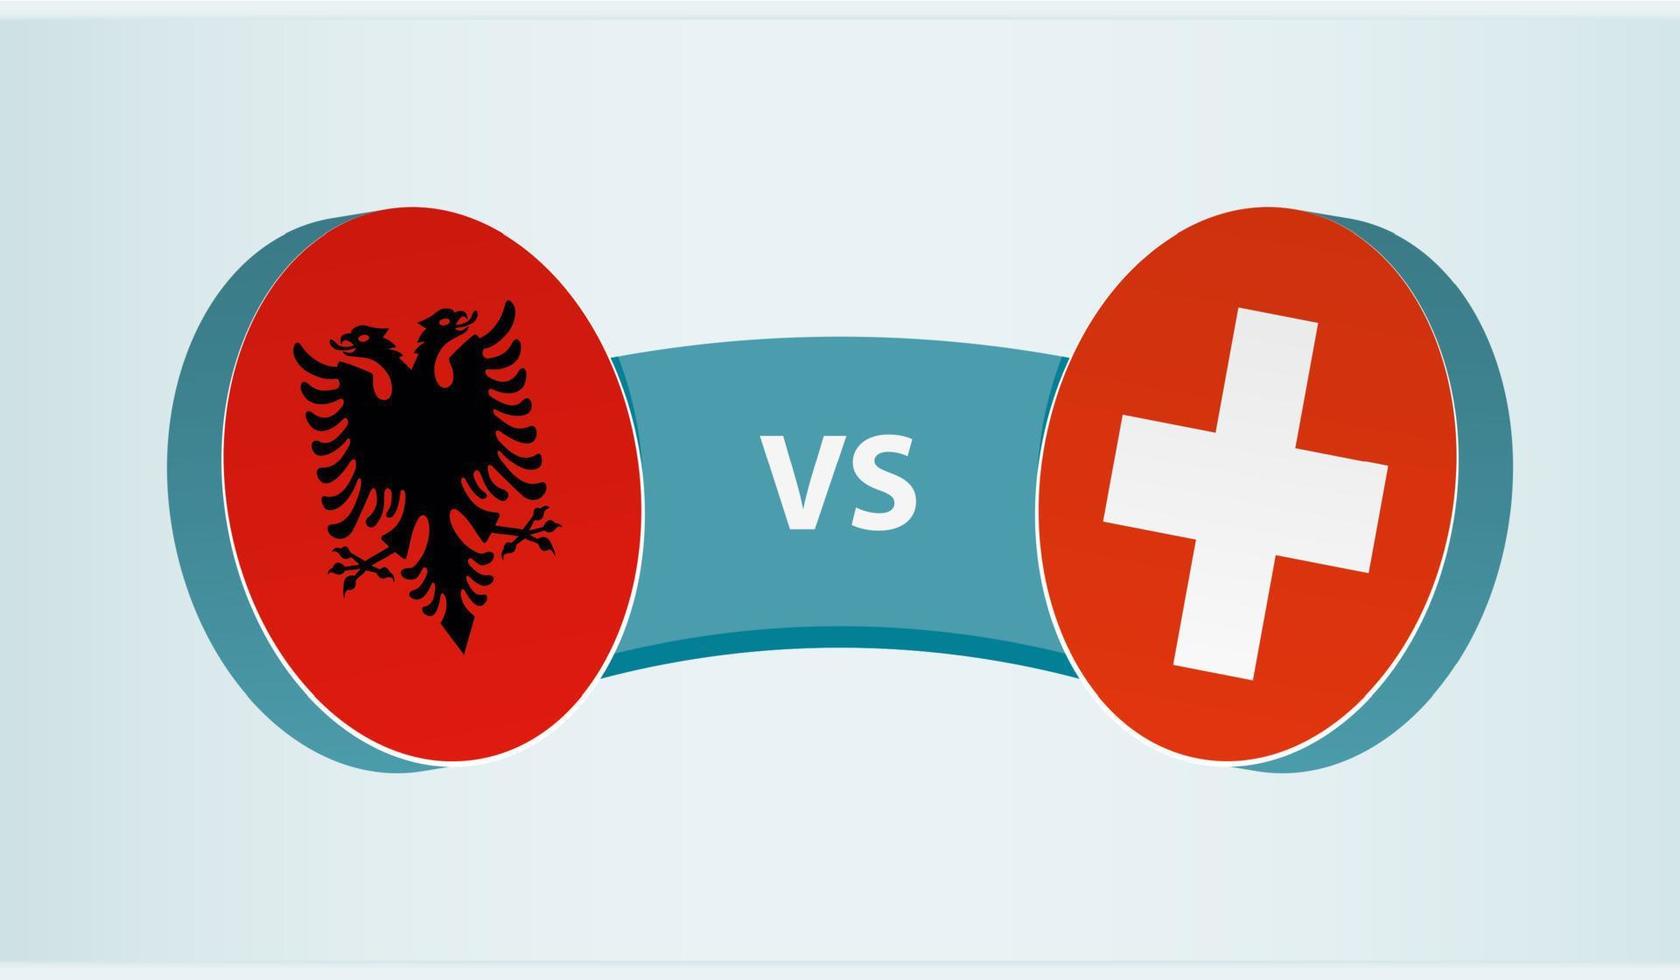 Albania versus Switzerland, team sports competition concept. vector